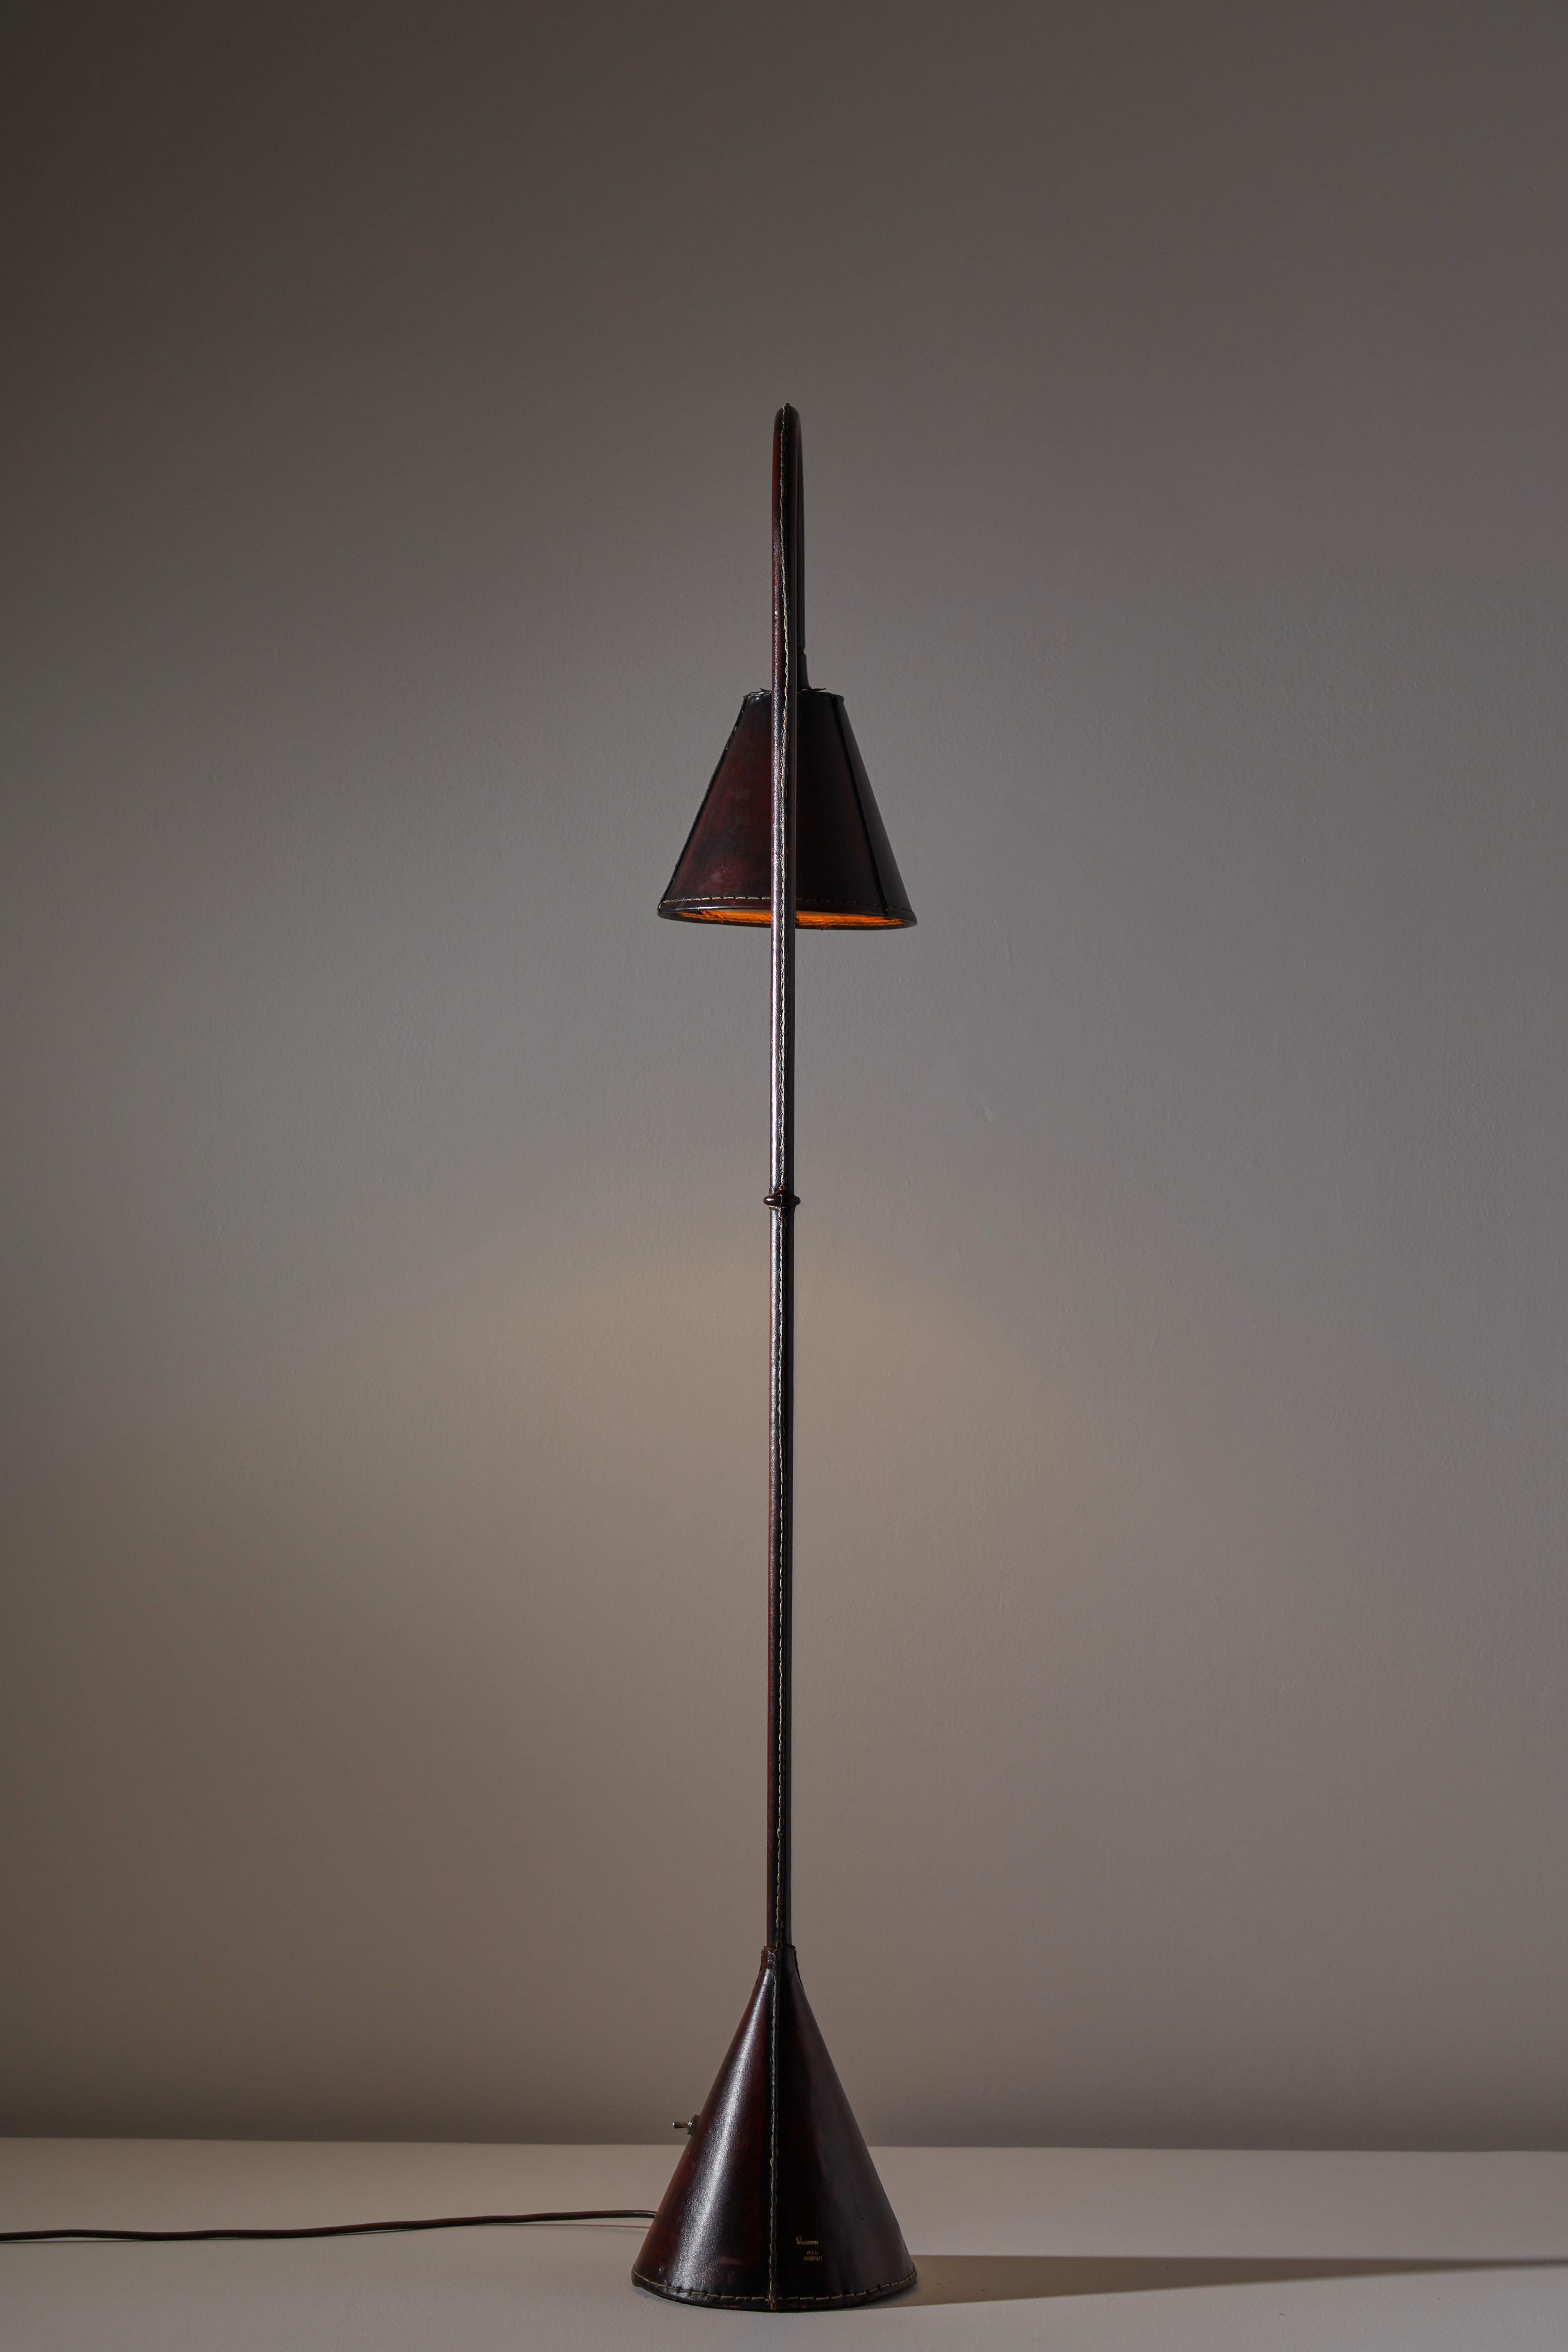 Mid-20th Century Floor Lamp by Valenti